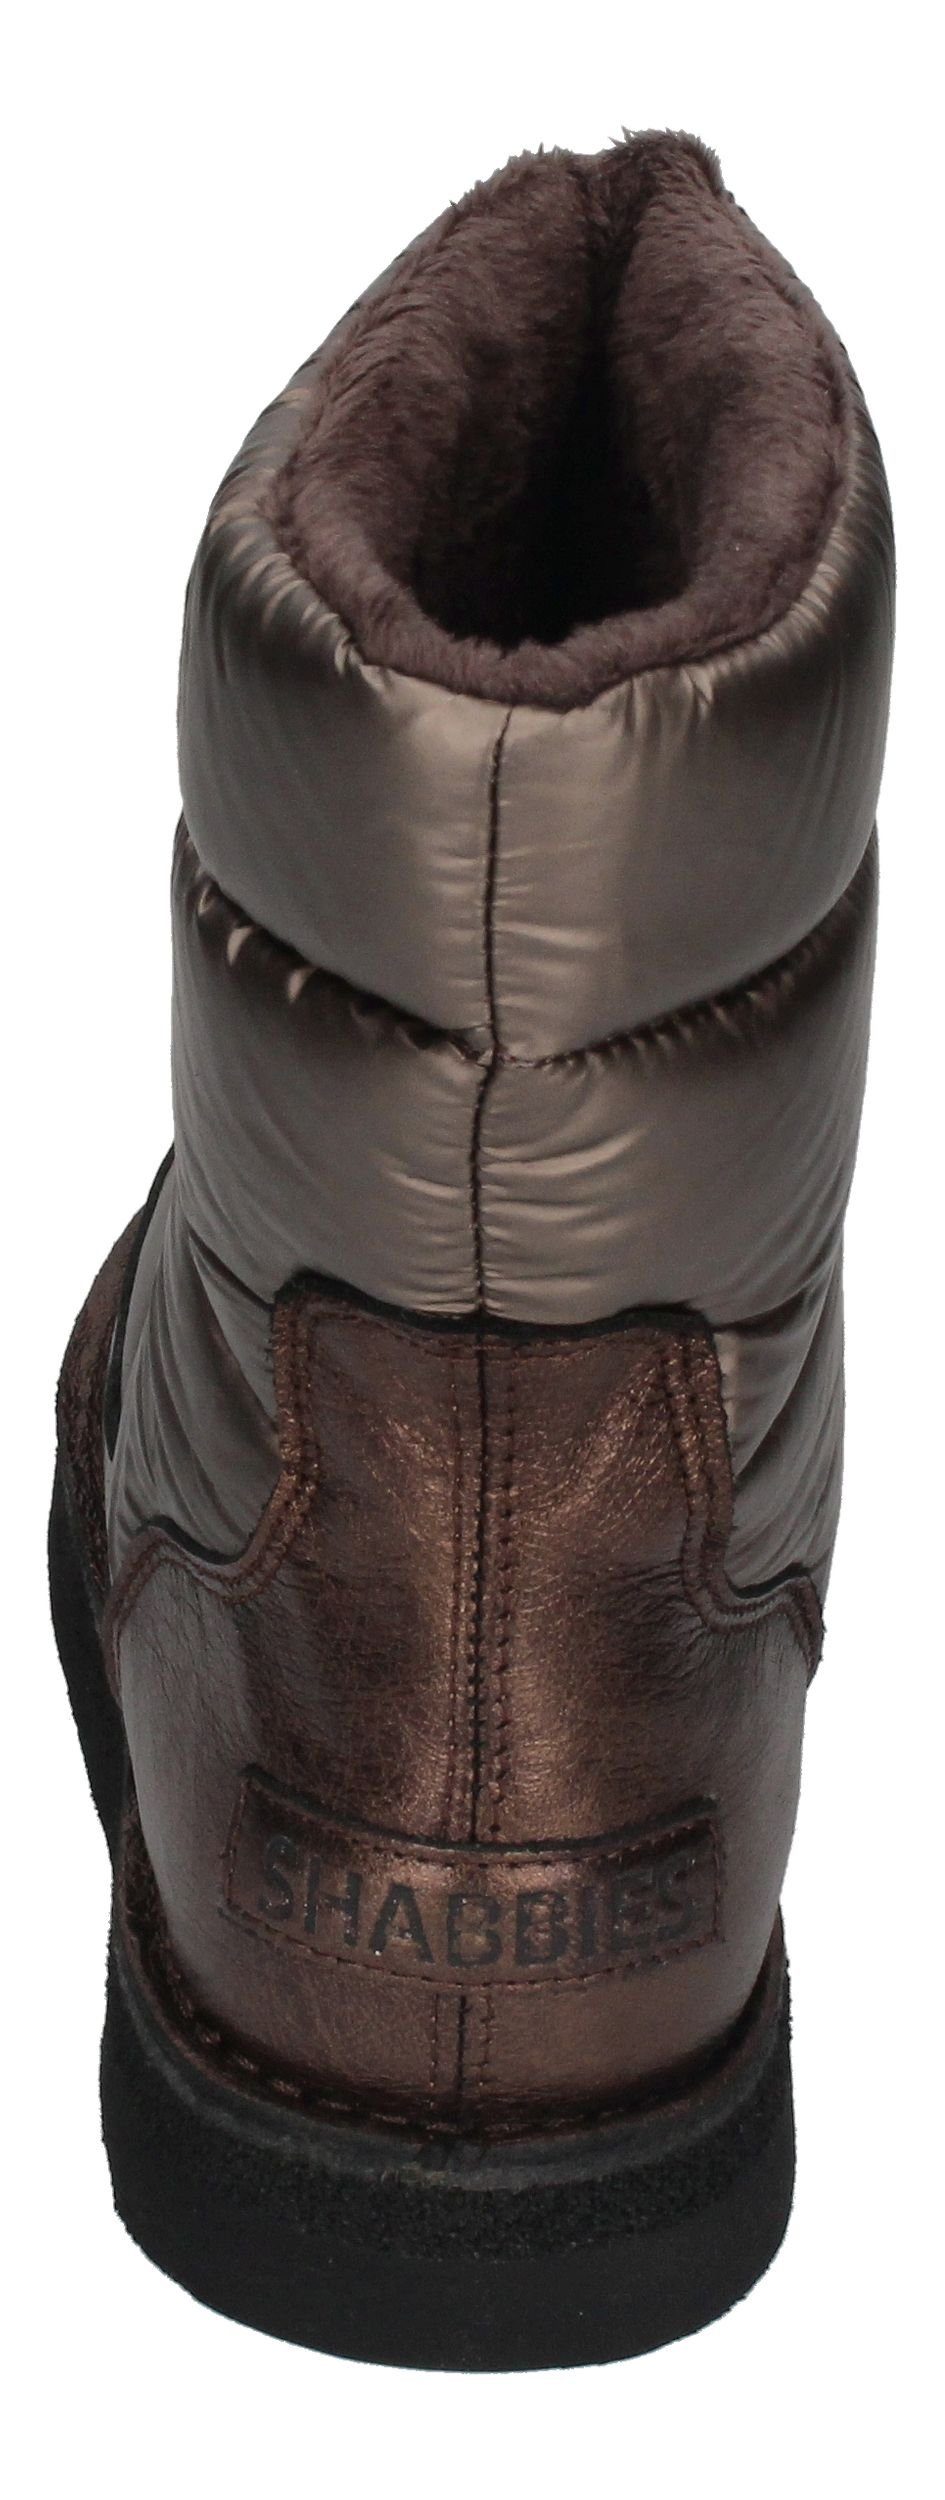 Shabbies Amsterdam Palissa SH001701633W Stiefelette Bronze